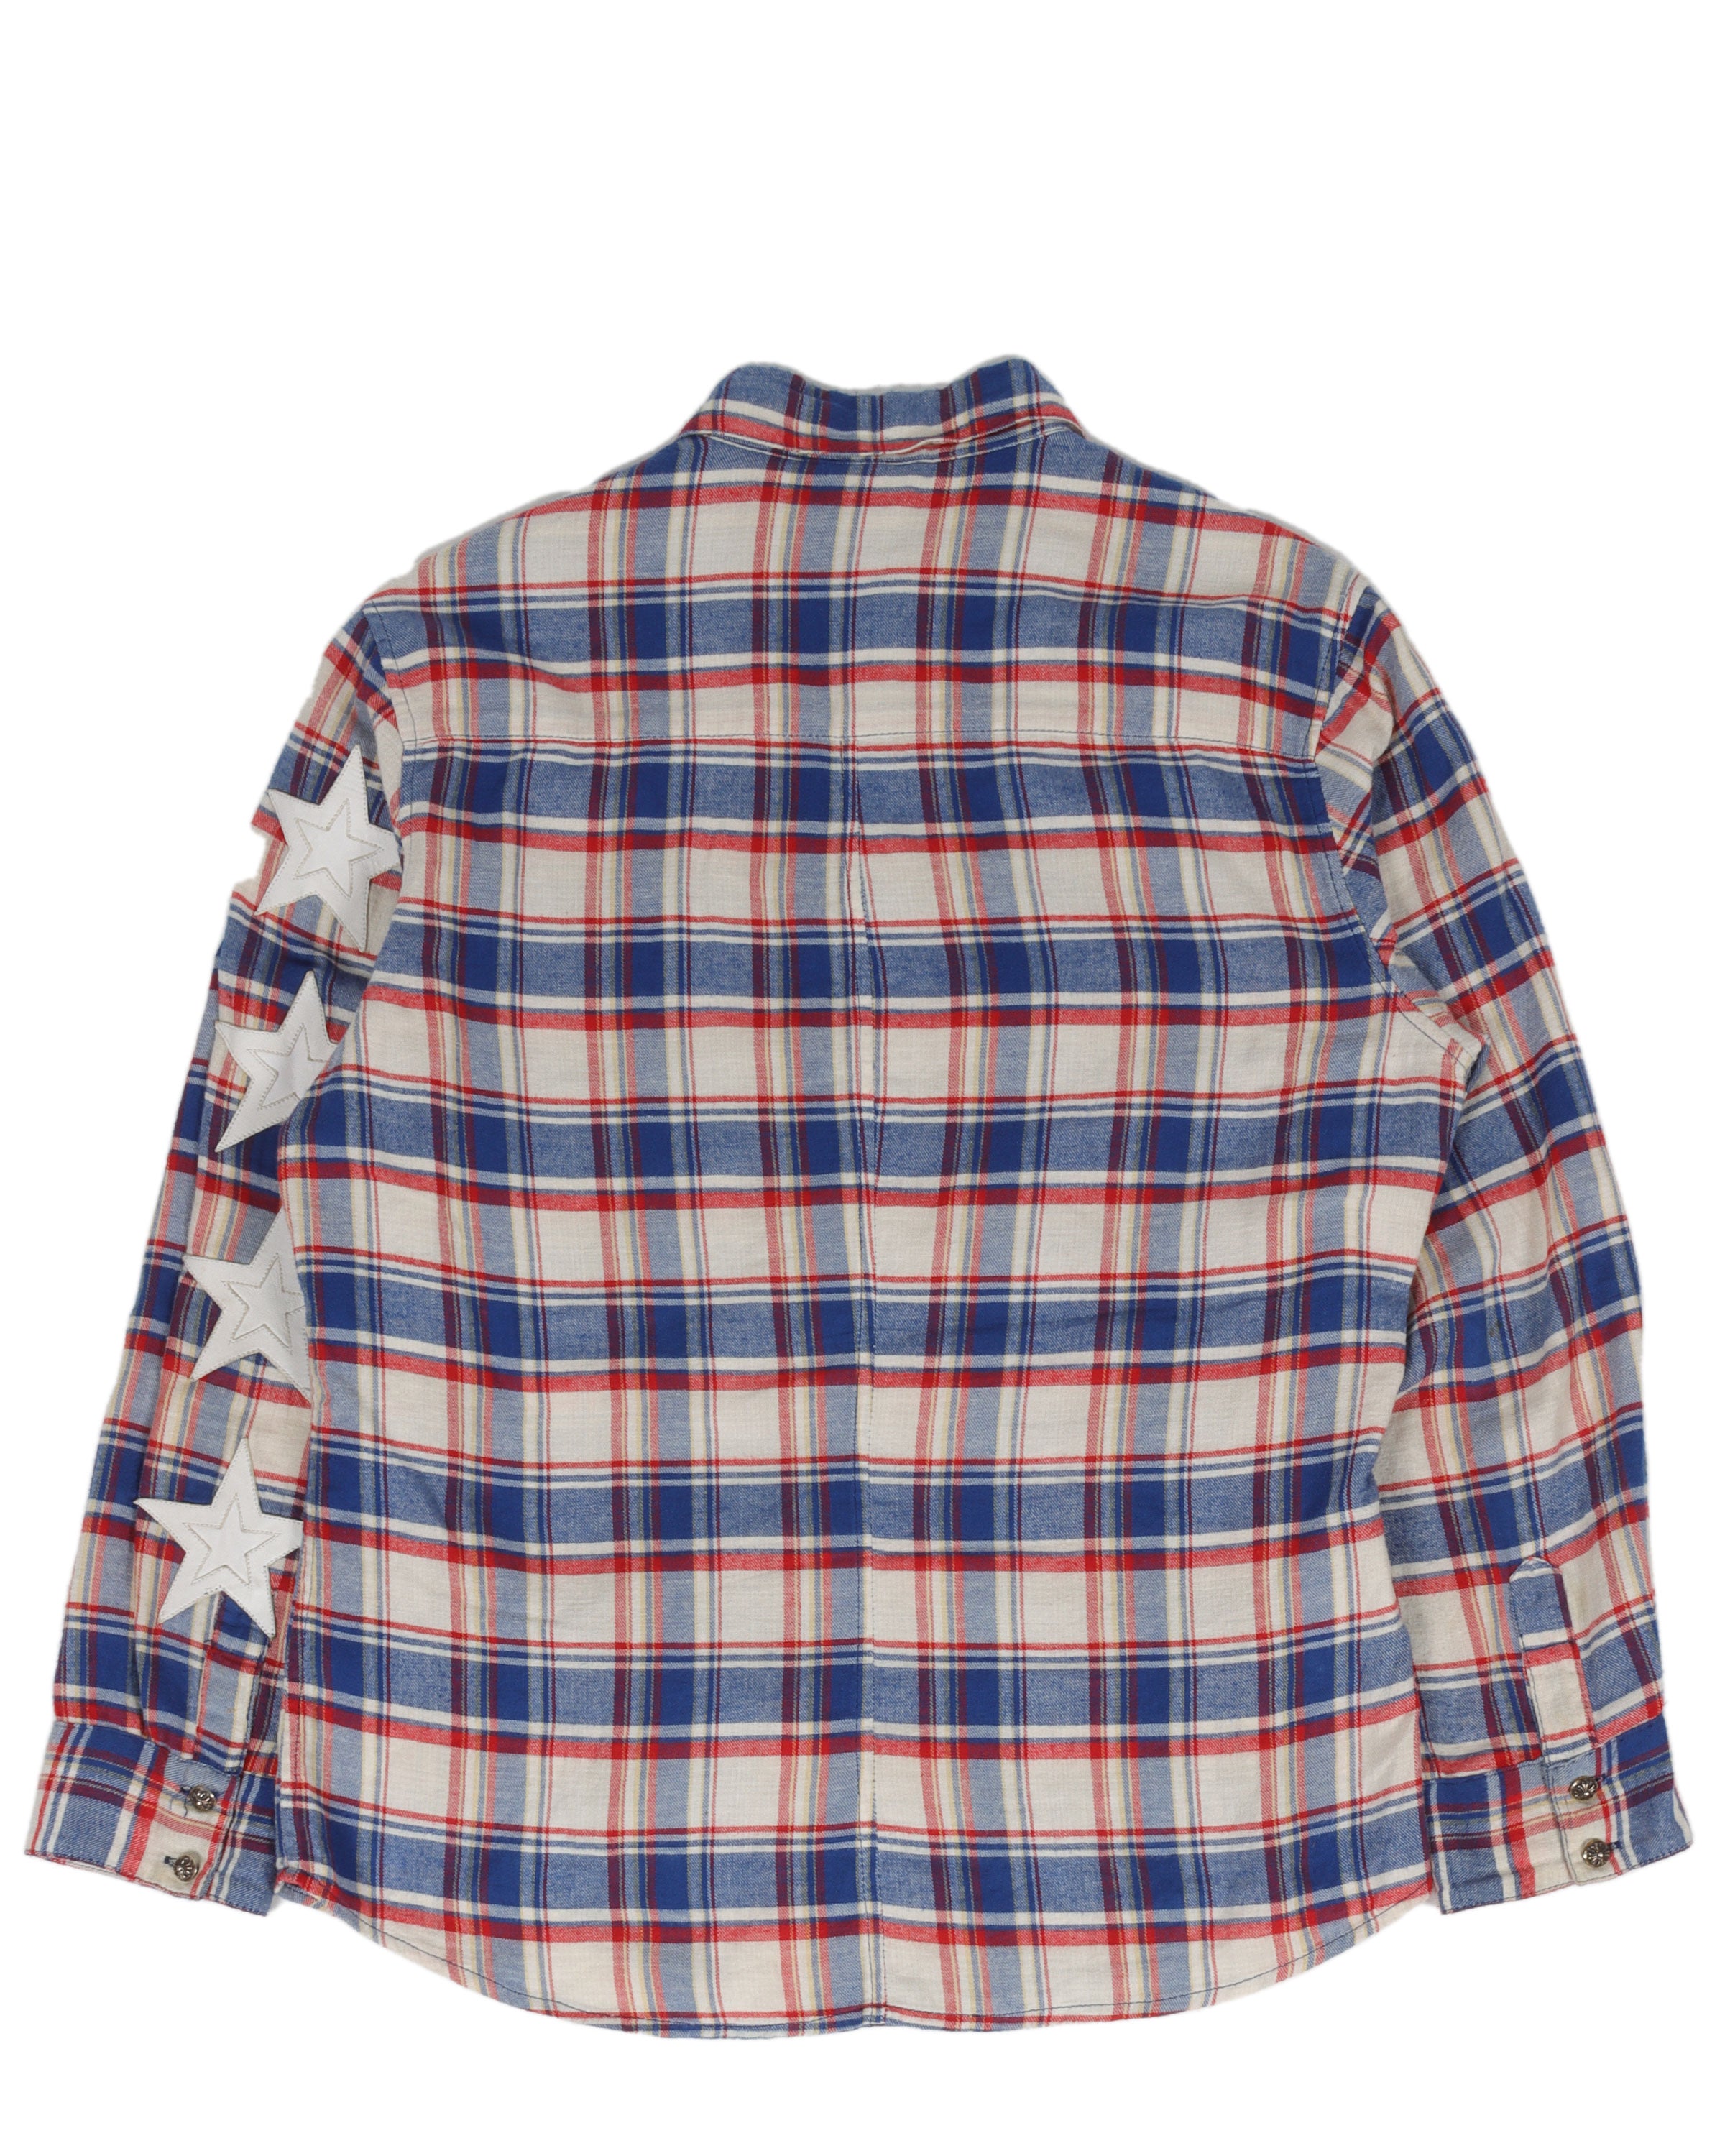 Star Patch Flannel Shirt